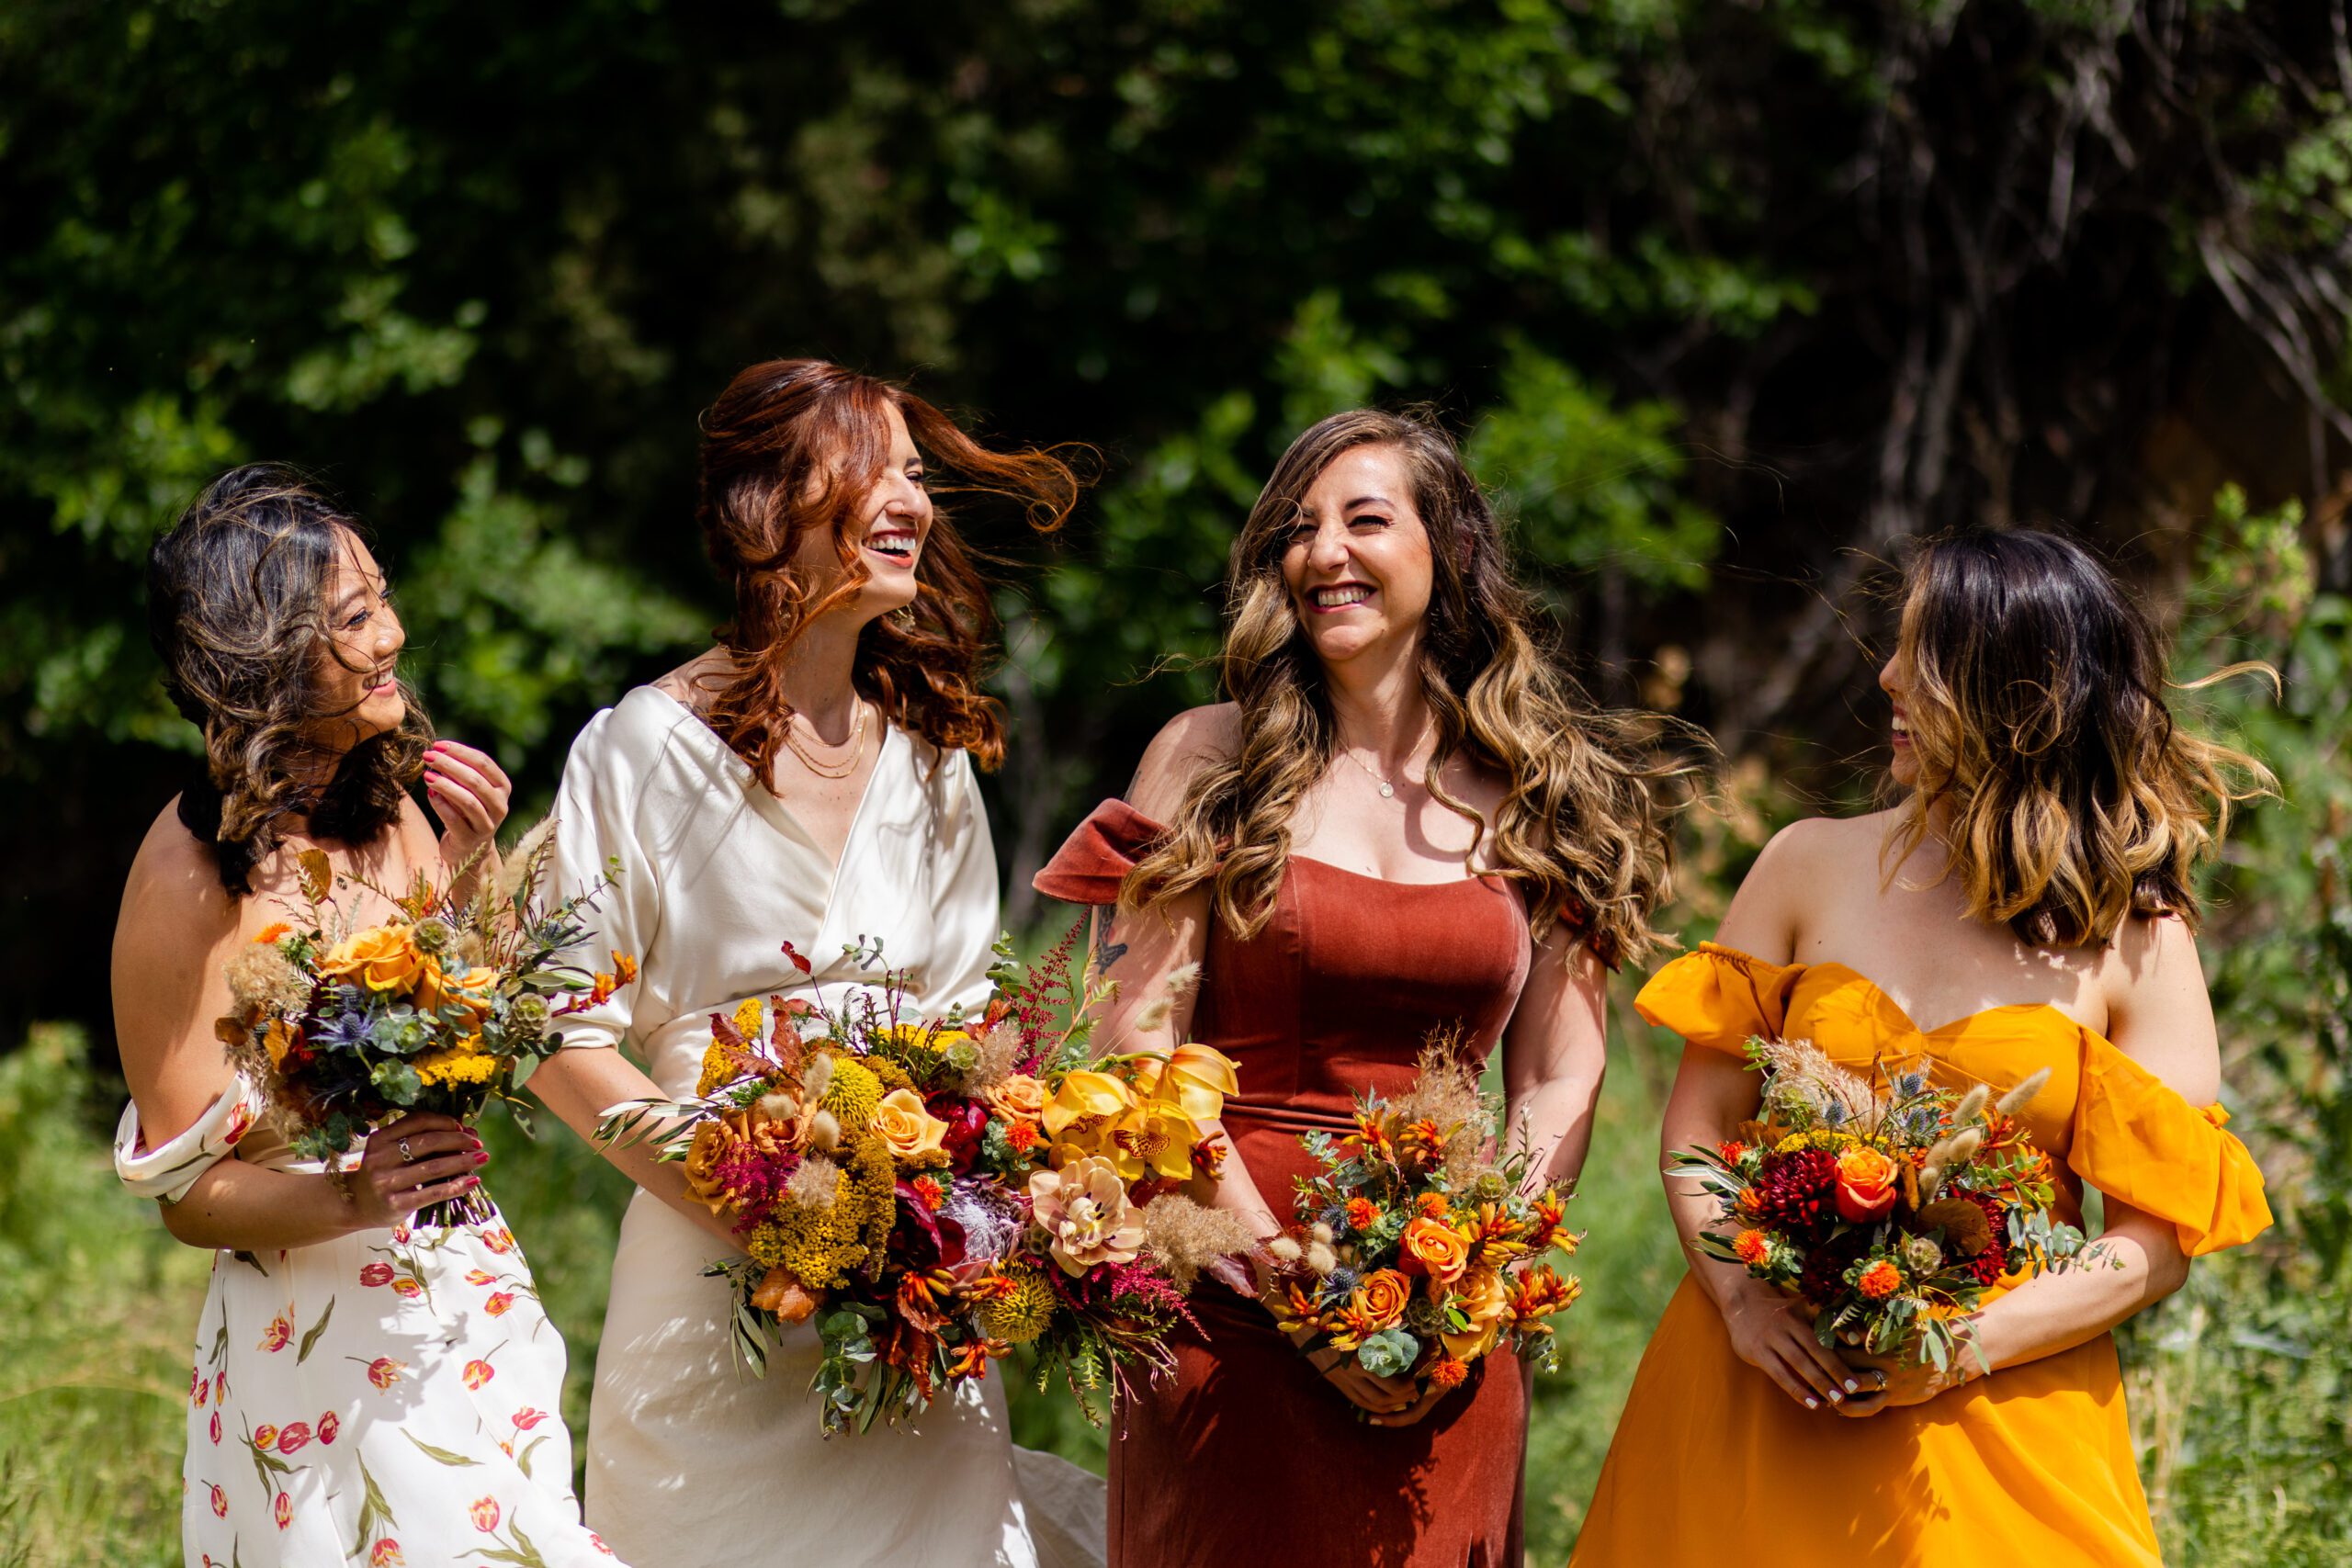 Bridesmaids dresses, boho bridesmaids dresses, jewel tone bridesmaids dresses, copper bridesmaids dress, mustard bridesmaids dress, bridesmaids bouquets, colorful wedding bouquet